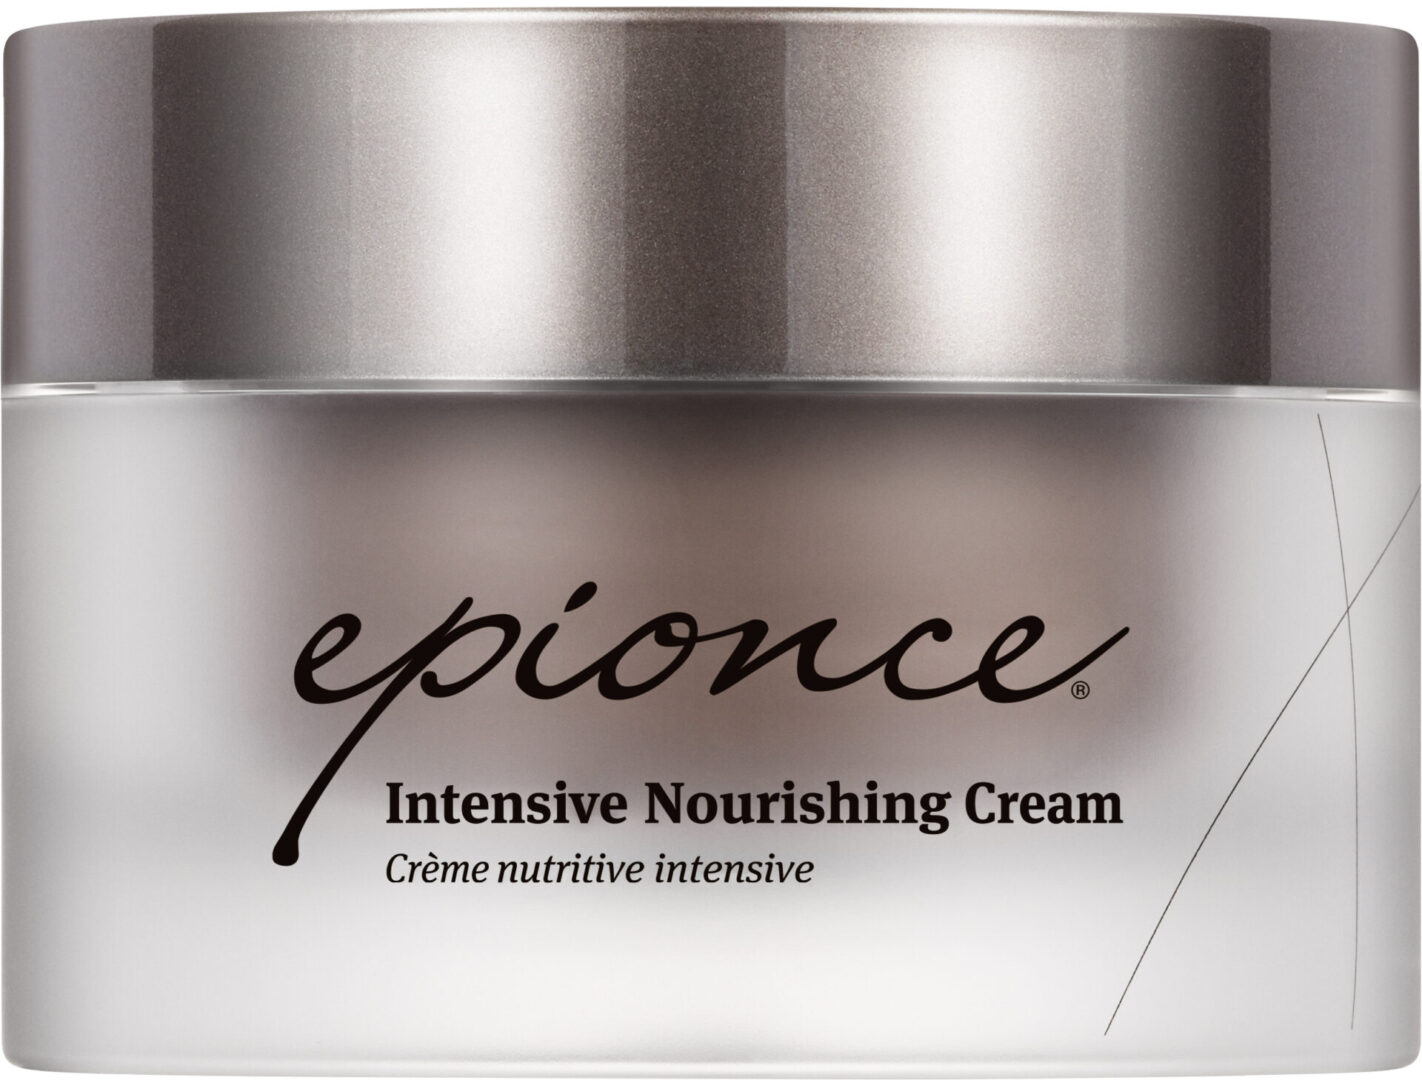 A jar of epionce intensive nourishing cream.